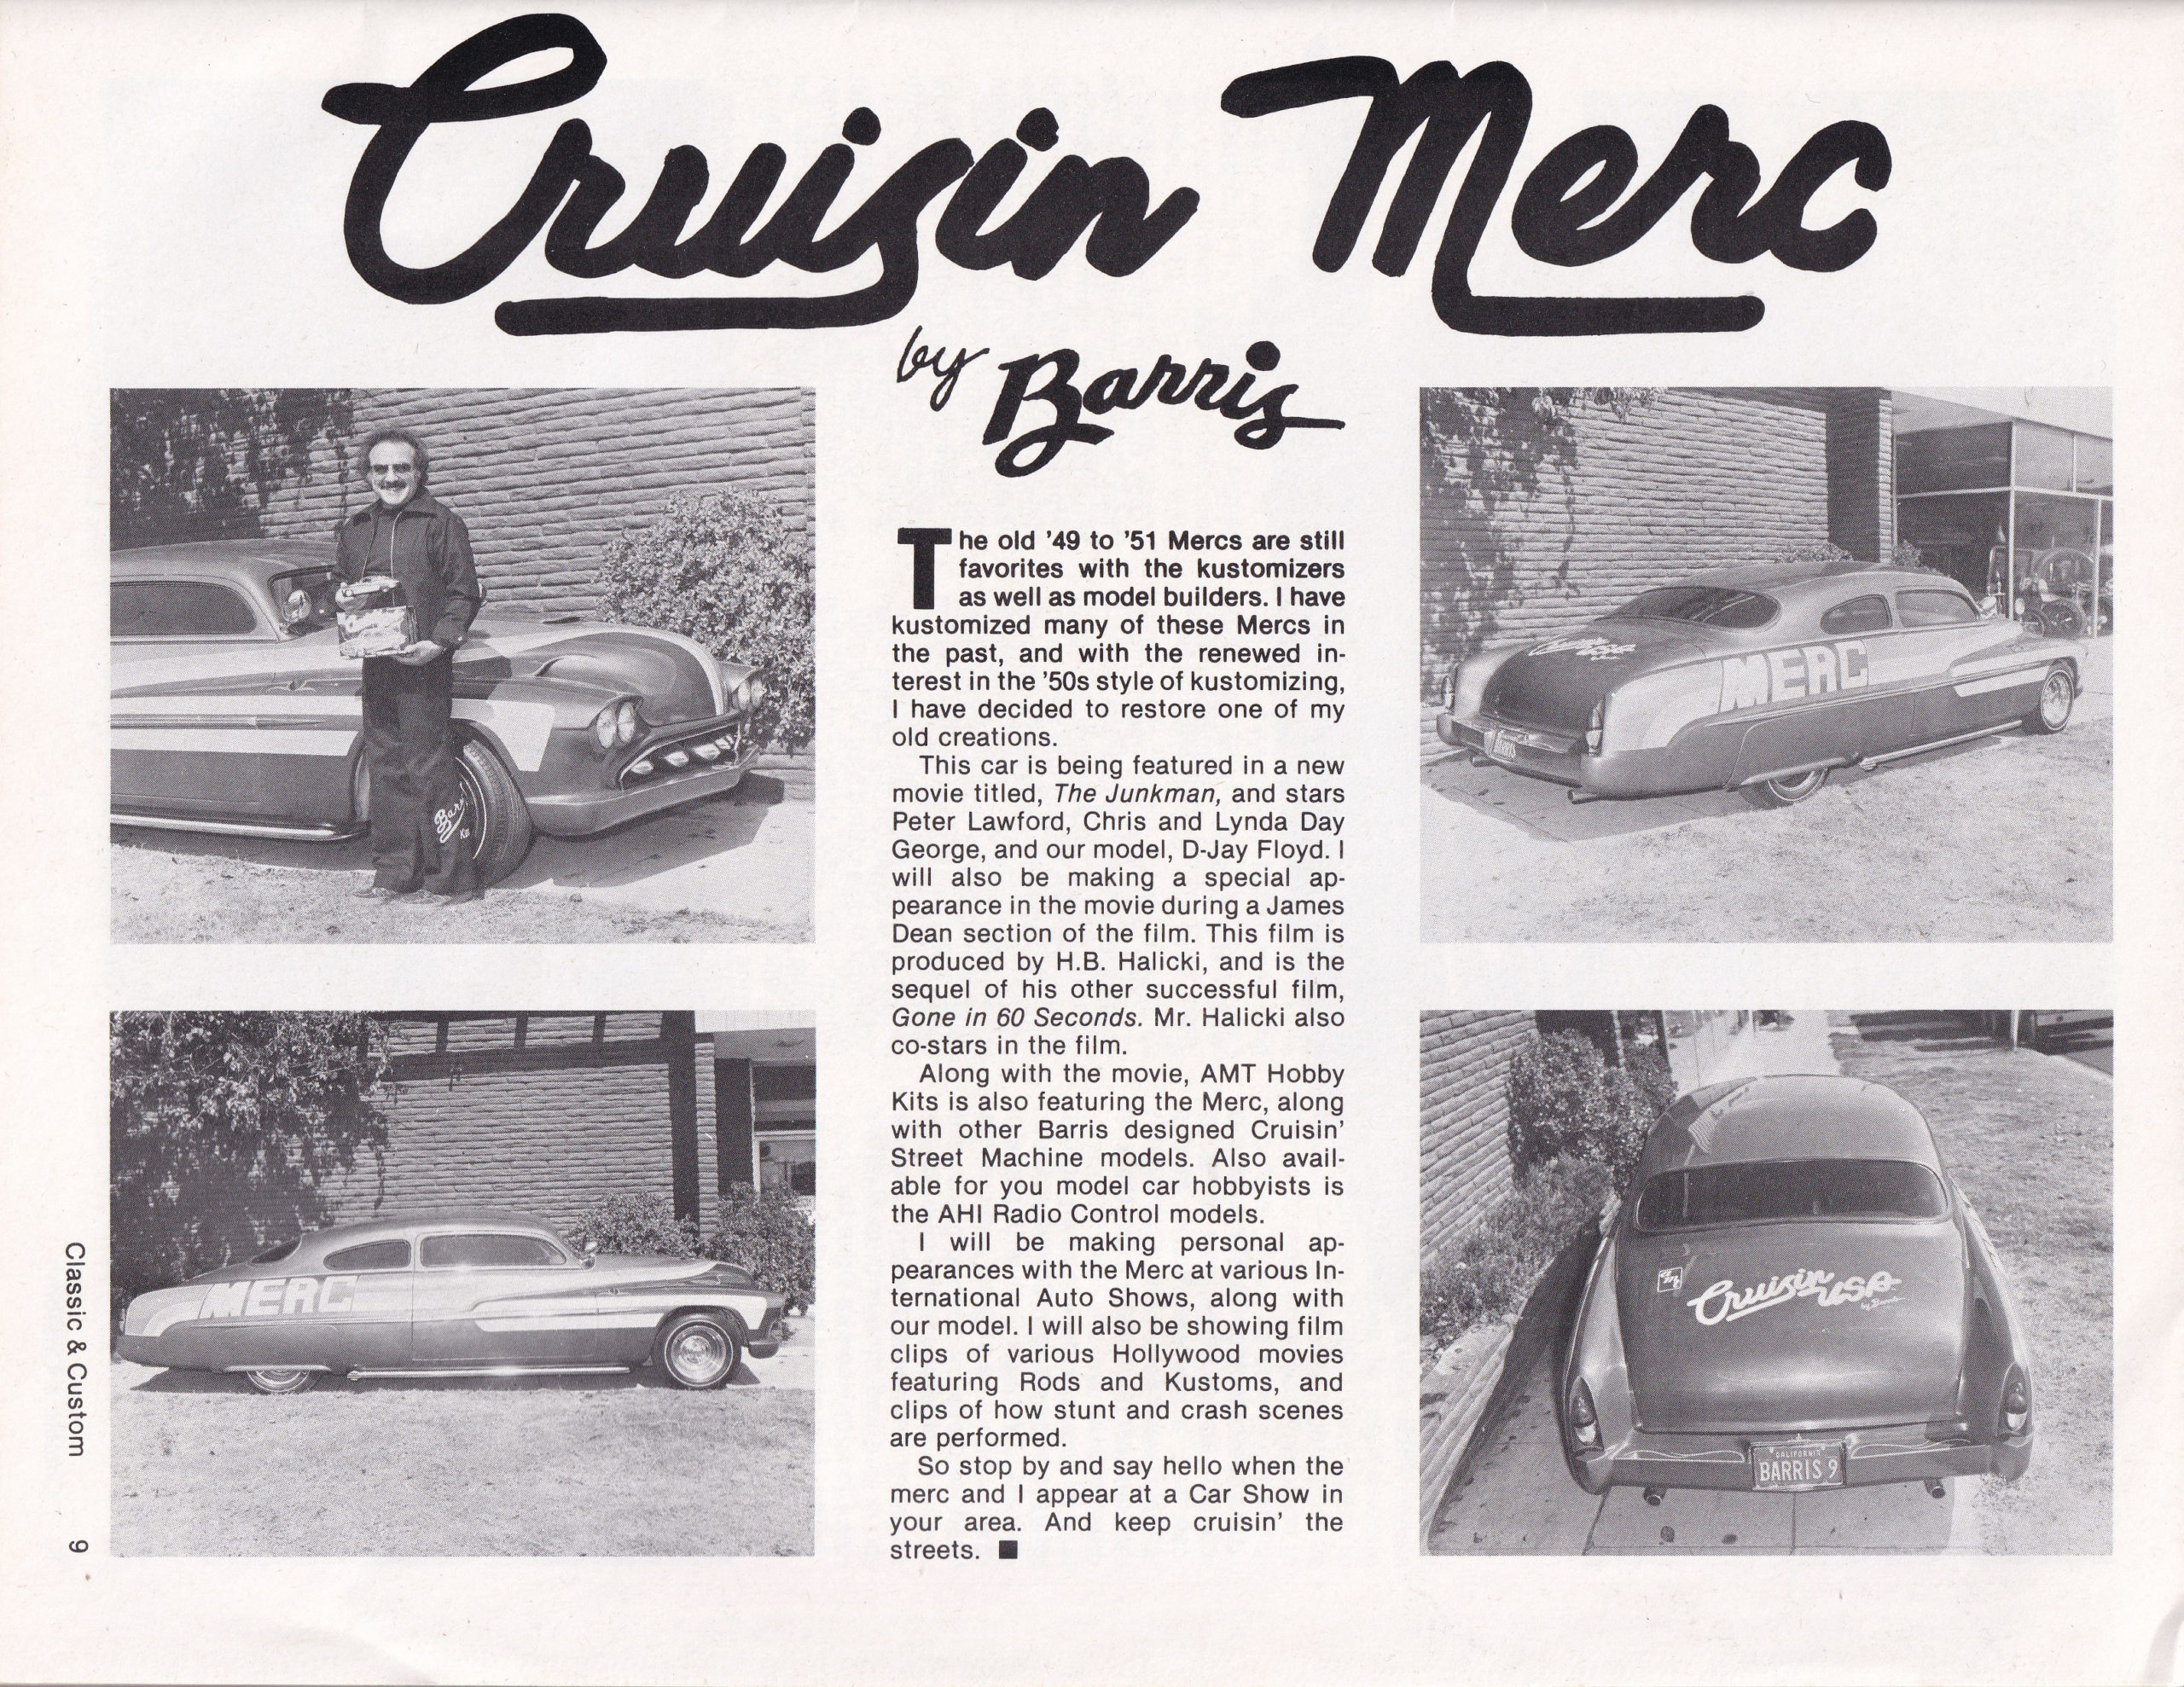 Cruisin' Merc Джорджа Барриса, статья из журнала Classic & Custom, Апрель 1981-ого.